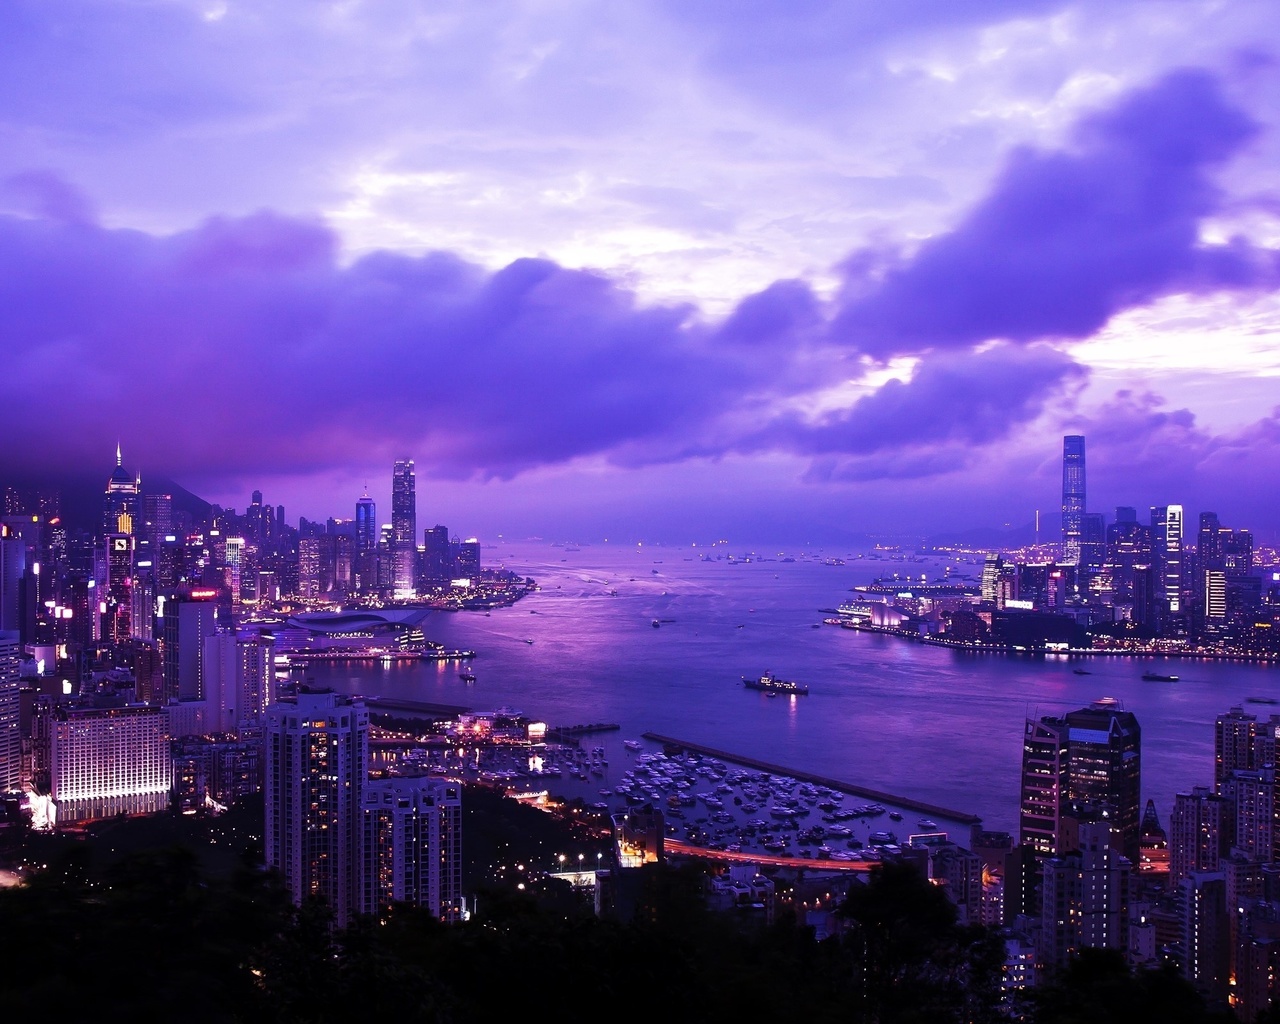 hong kong, china, city, braemar hill, victoria harbour, evening, dawn, skyscrapers